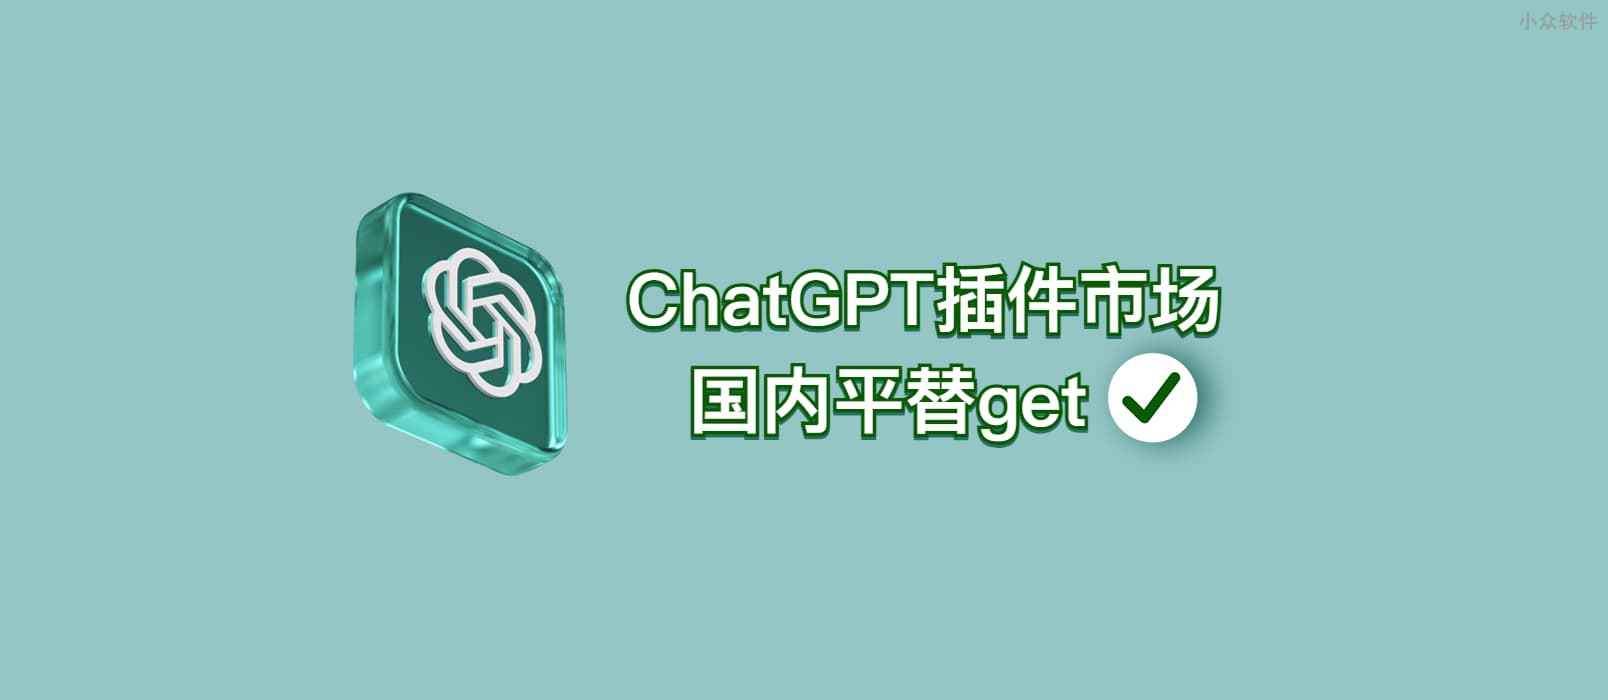 ChatGPT 插件市场国内平替